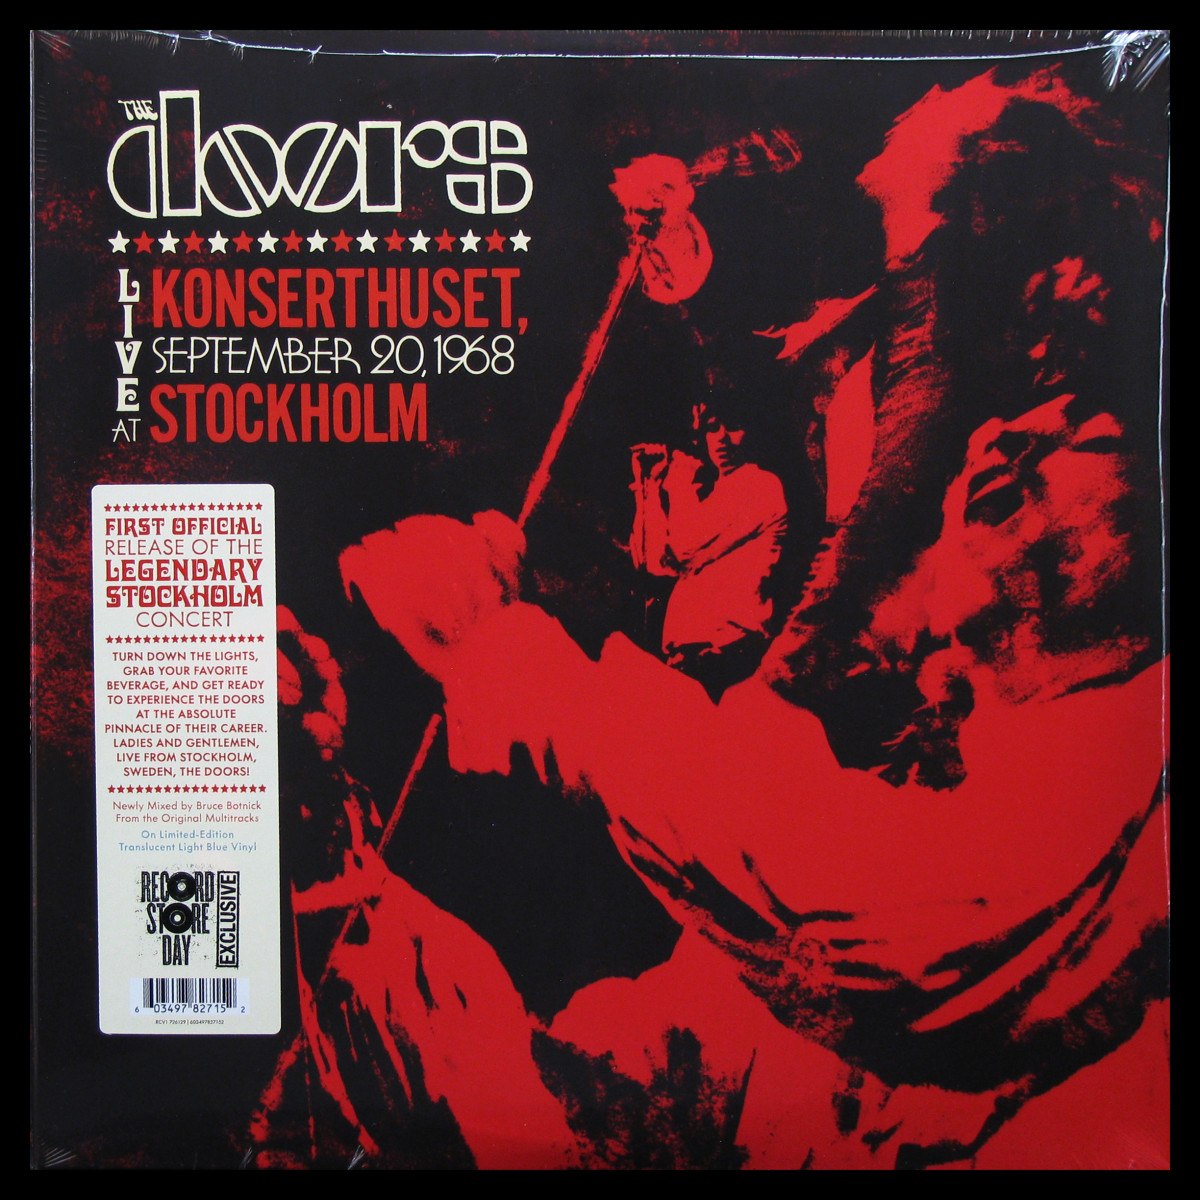 Live At Konserthuset, Stockholm, September 20, 1968